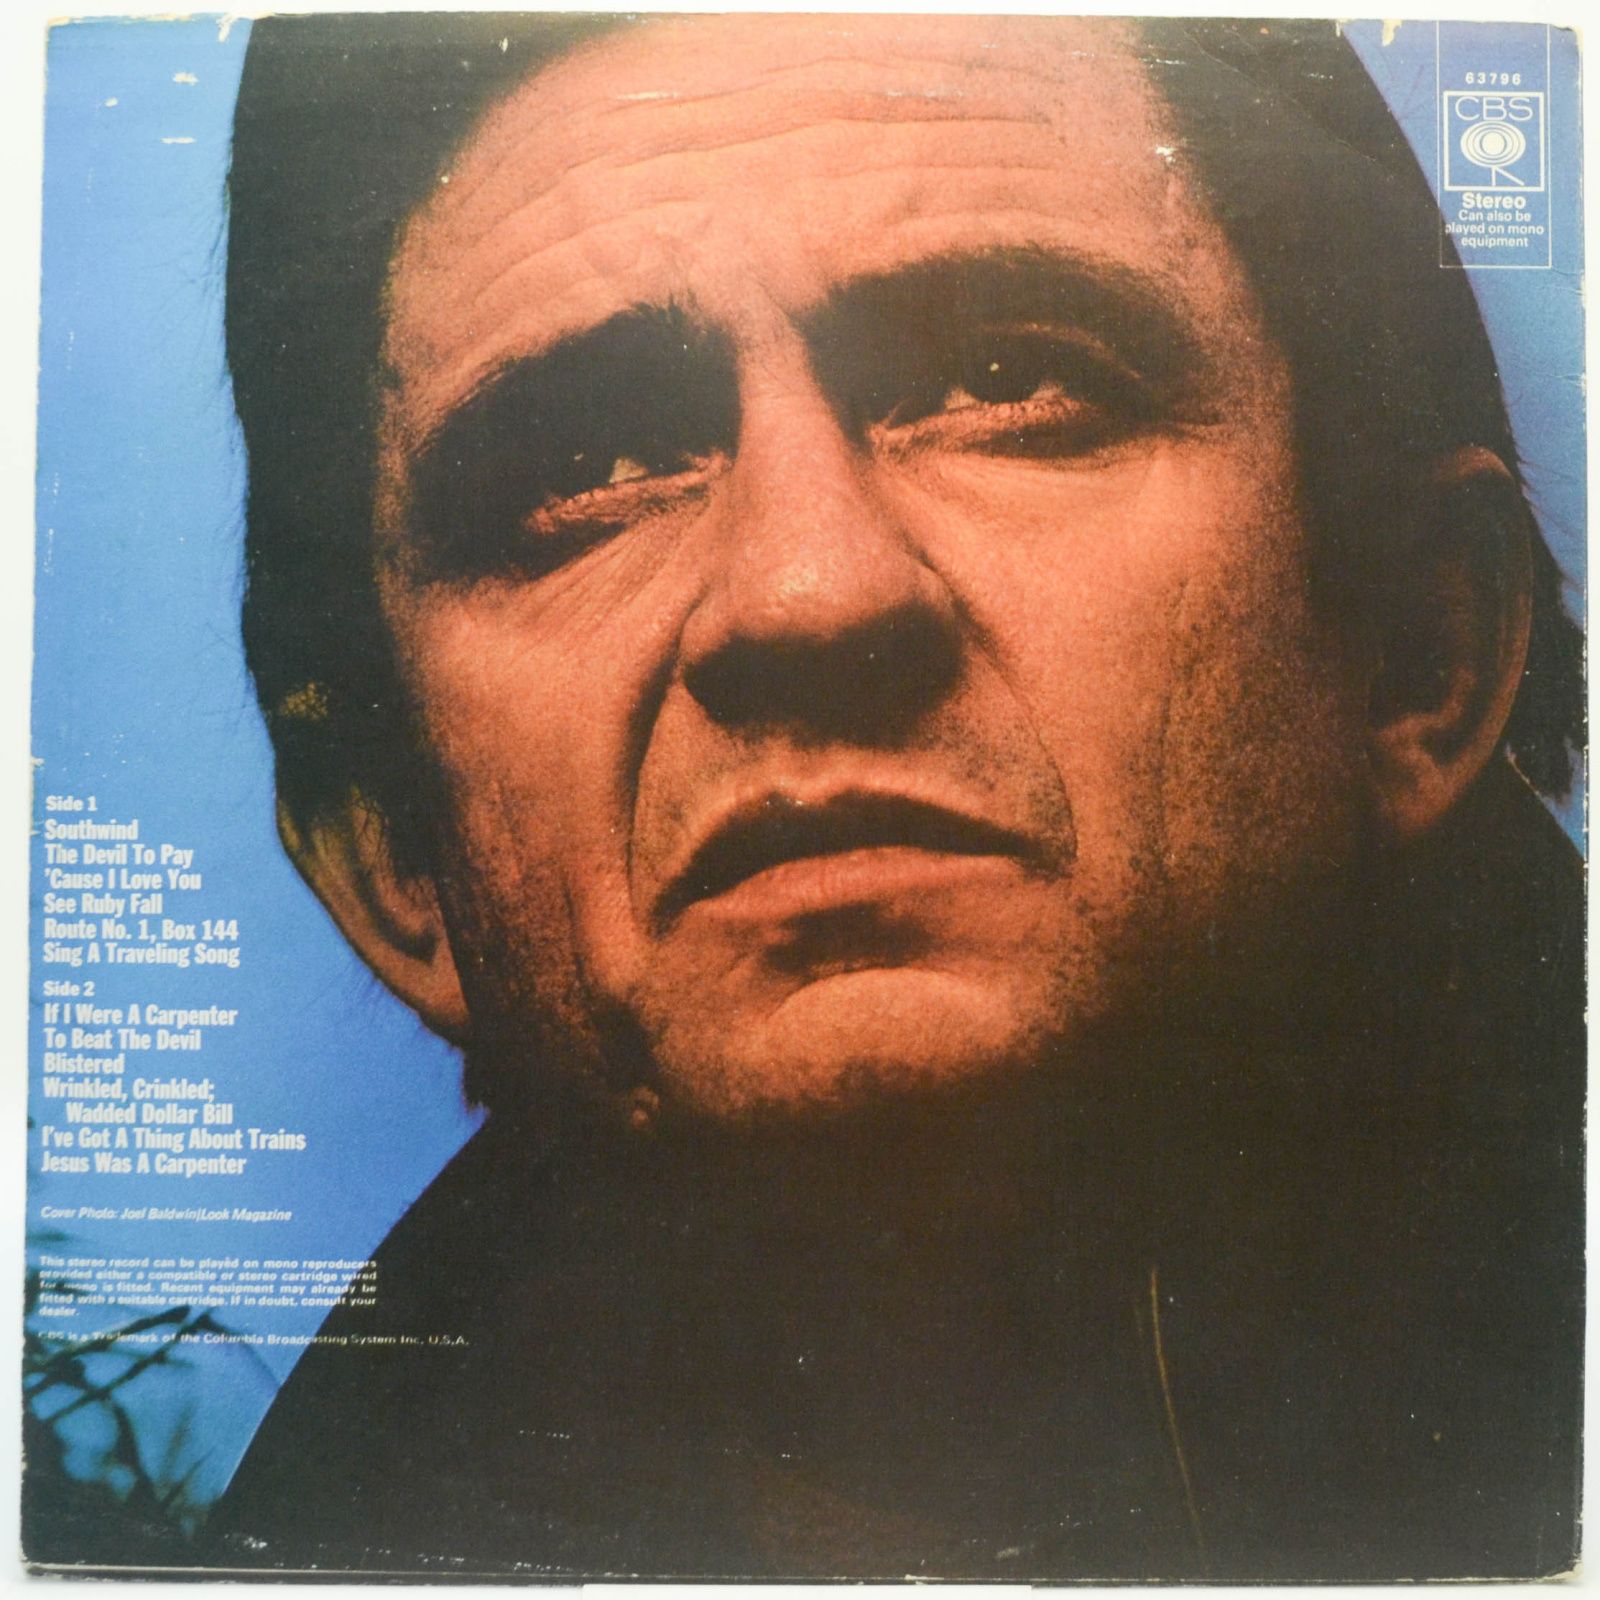 Johnny Cash — Hello, I'm Johnny Cash, 1970